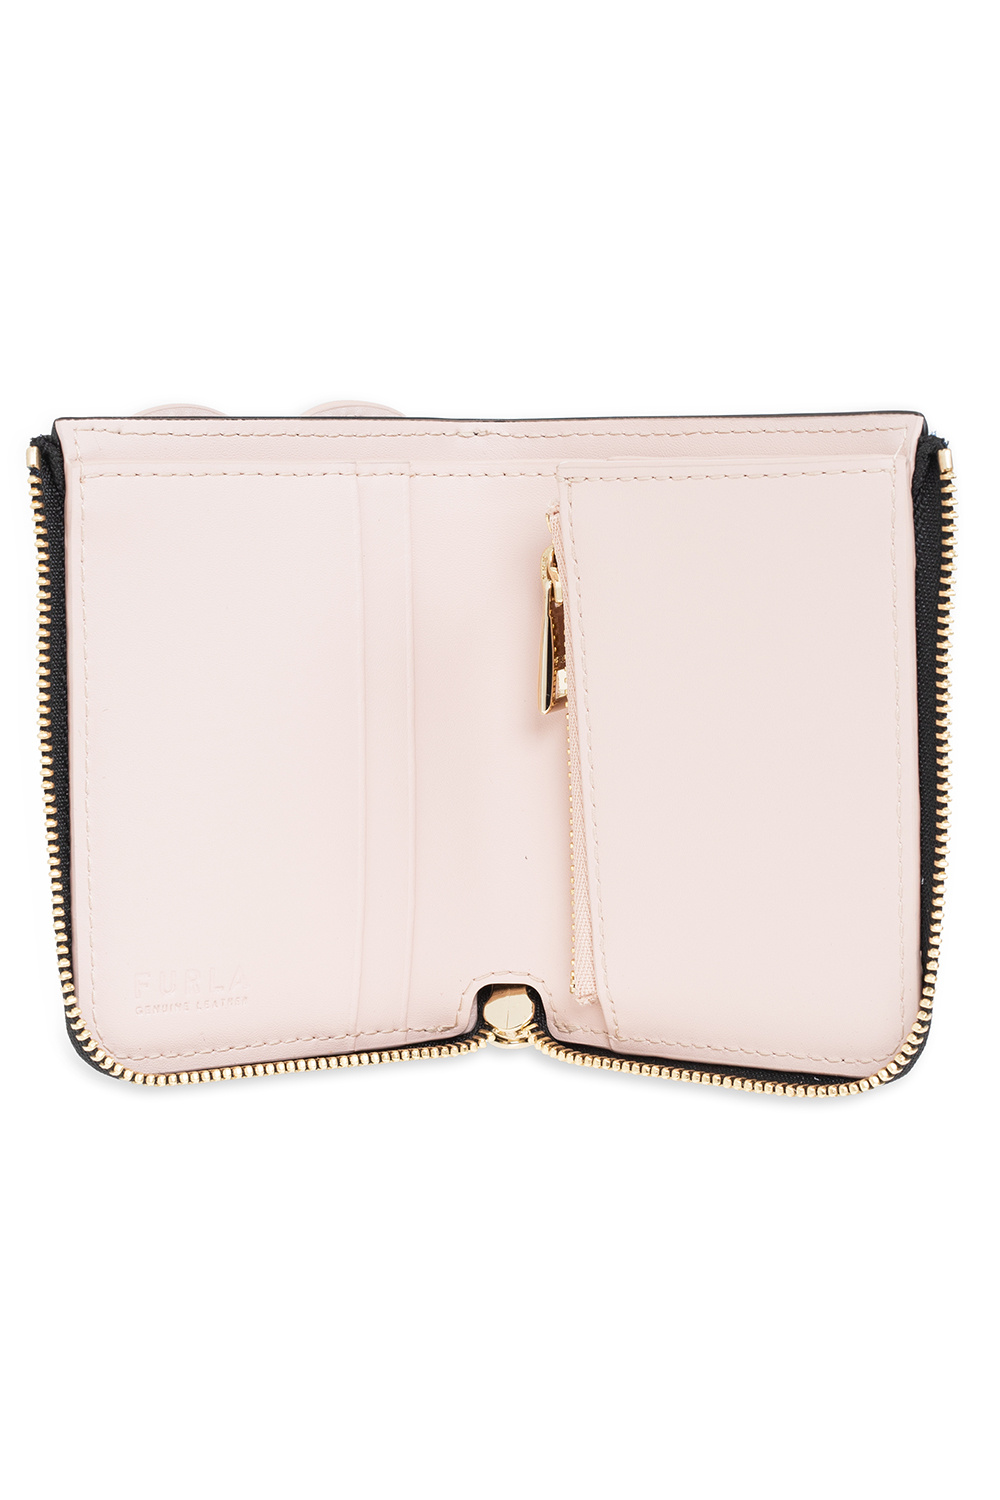 Furla 'Lovely S' wallet | Women's Accessories | IetpShops